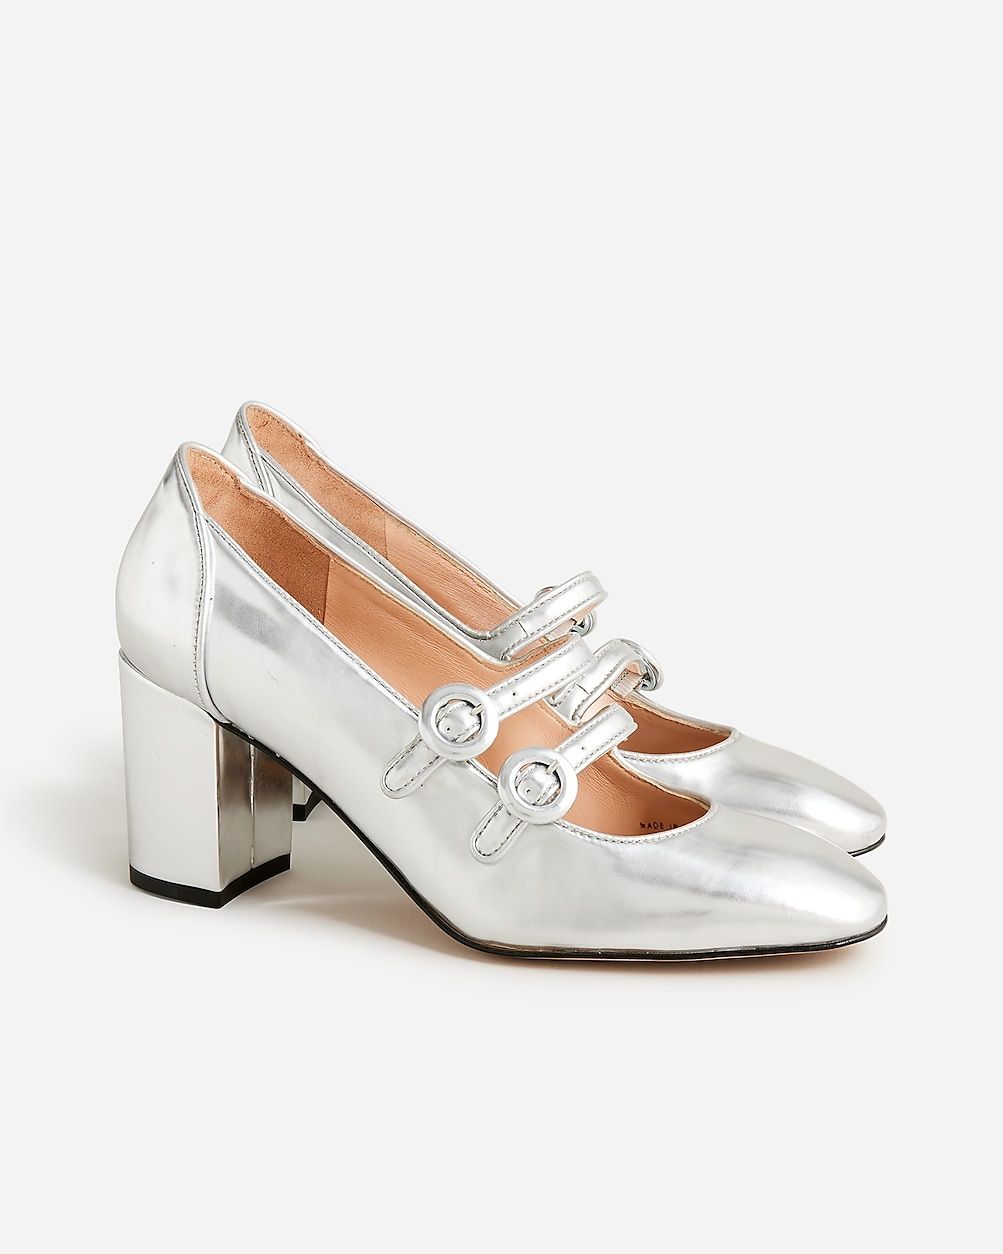 Maisie double-strap heels in metallic leather | J.Crew US